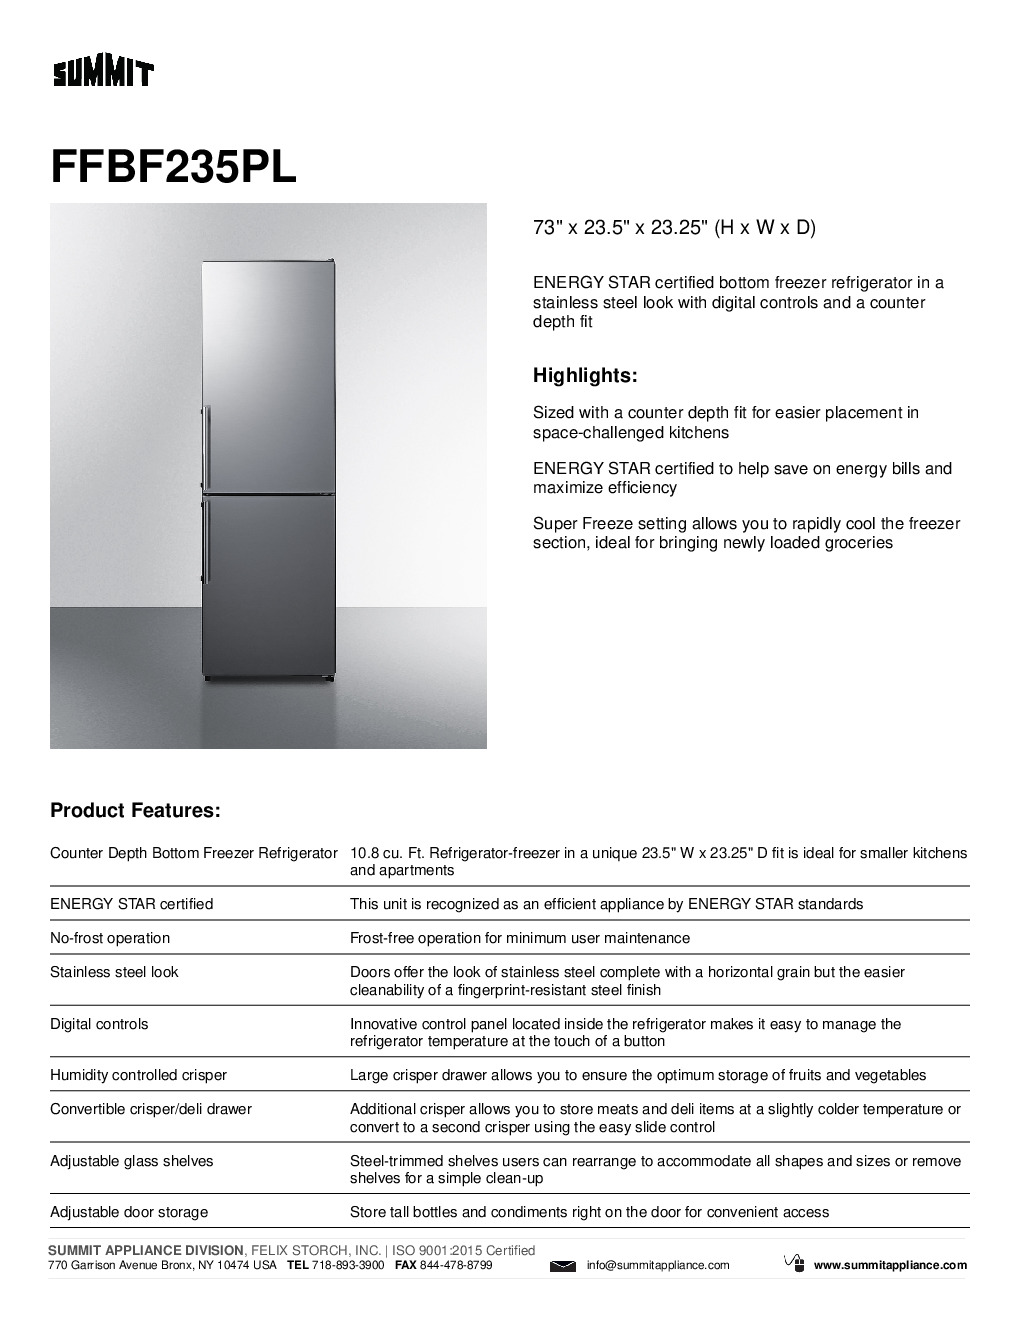 Summit FFBF235PL Reach-In Refrigerator Freezer